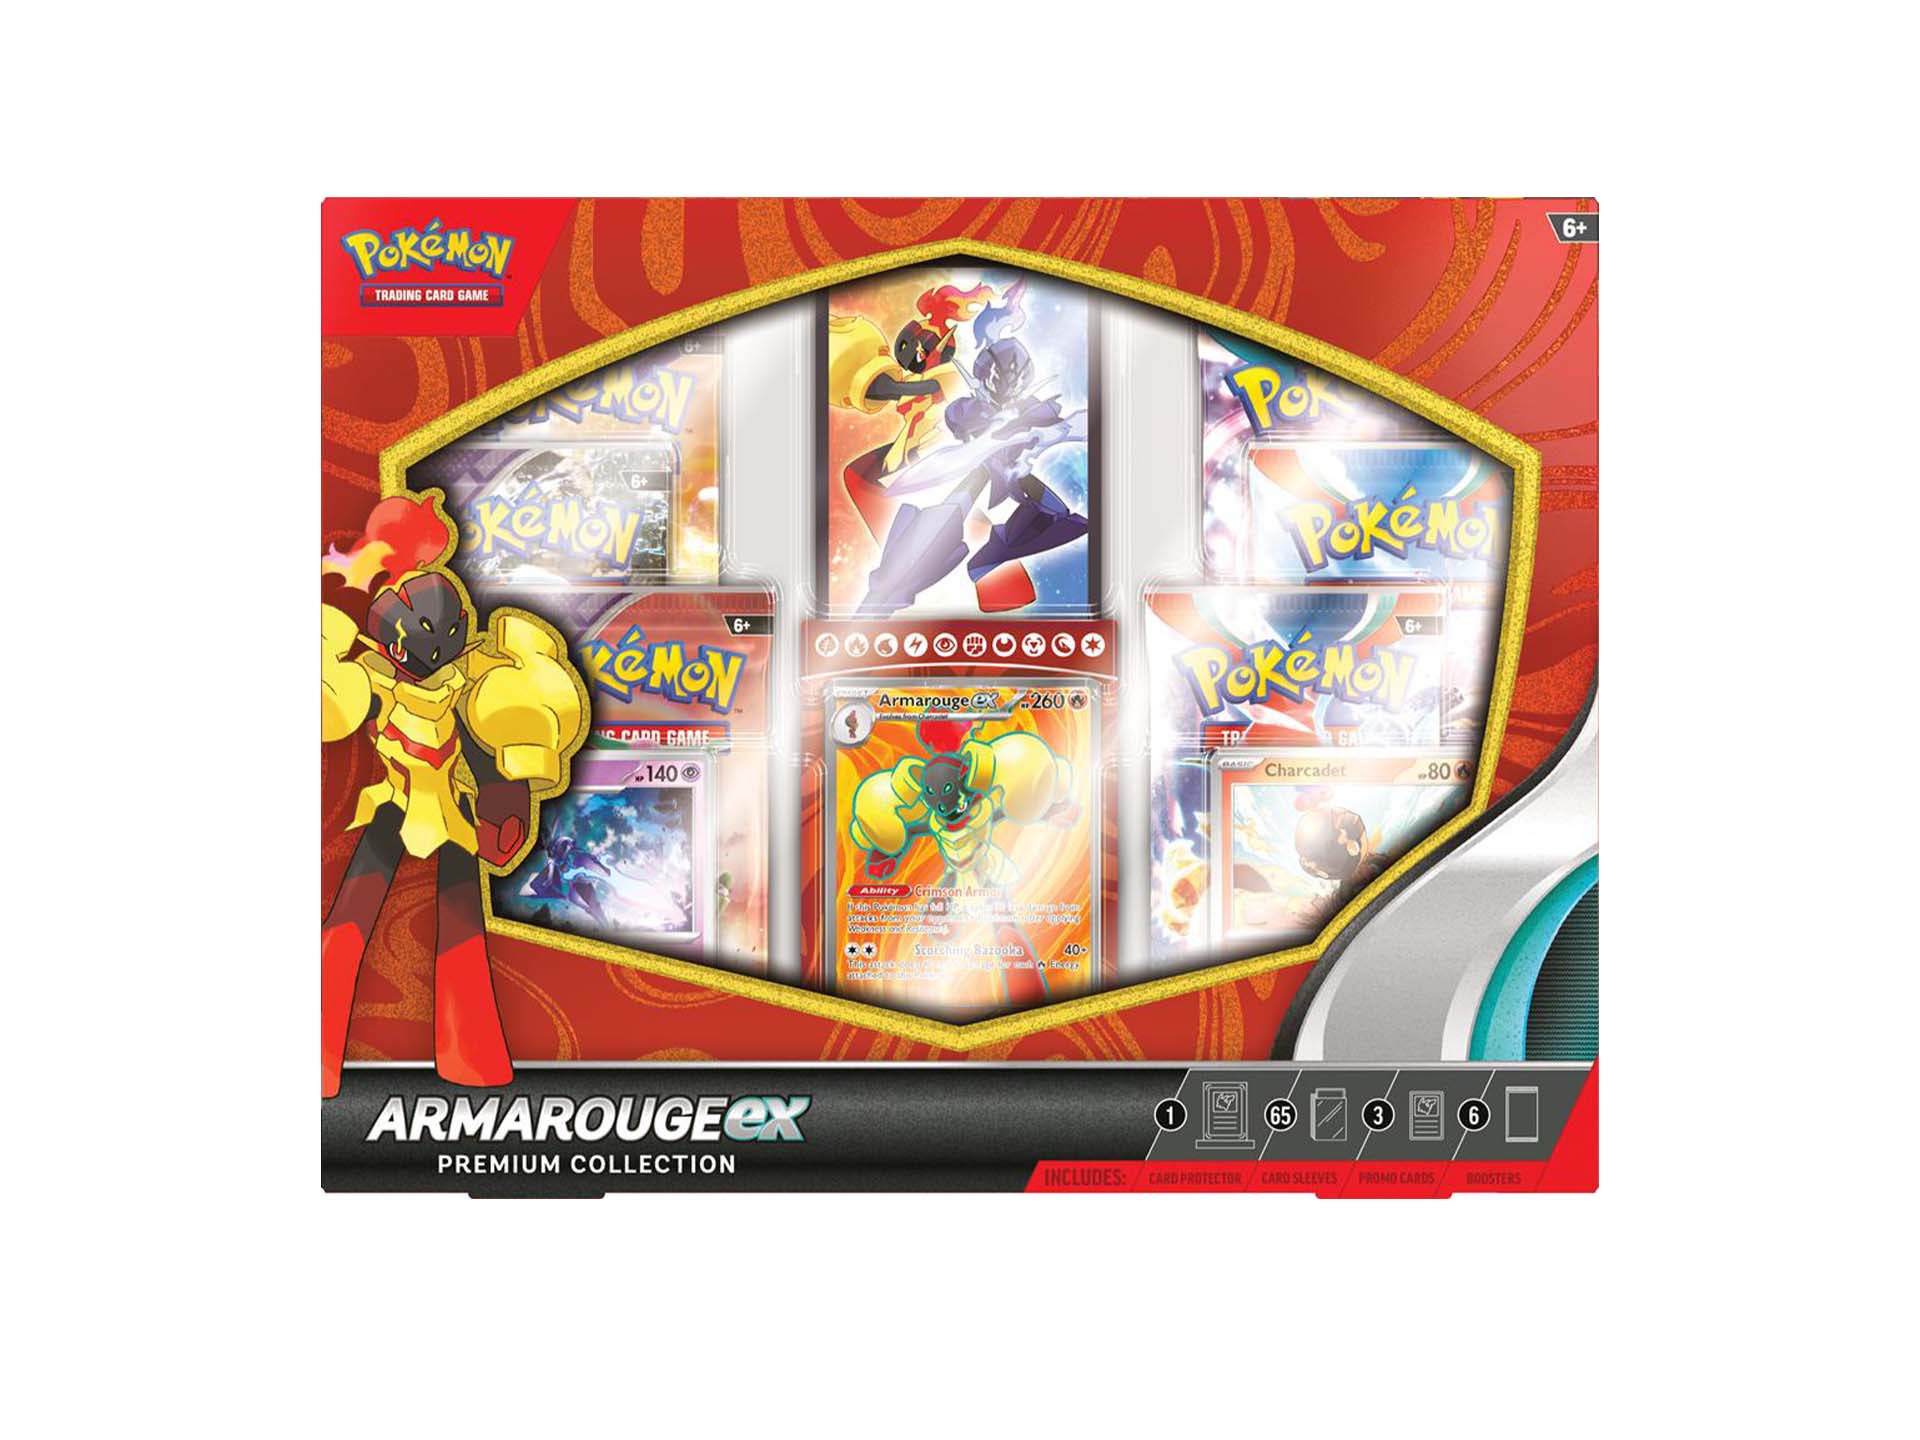 Pokémon Armarouge Ex Premium Collection